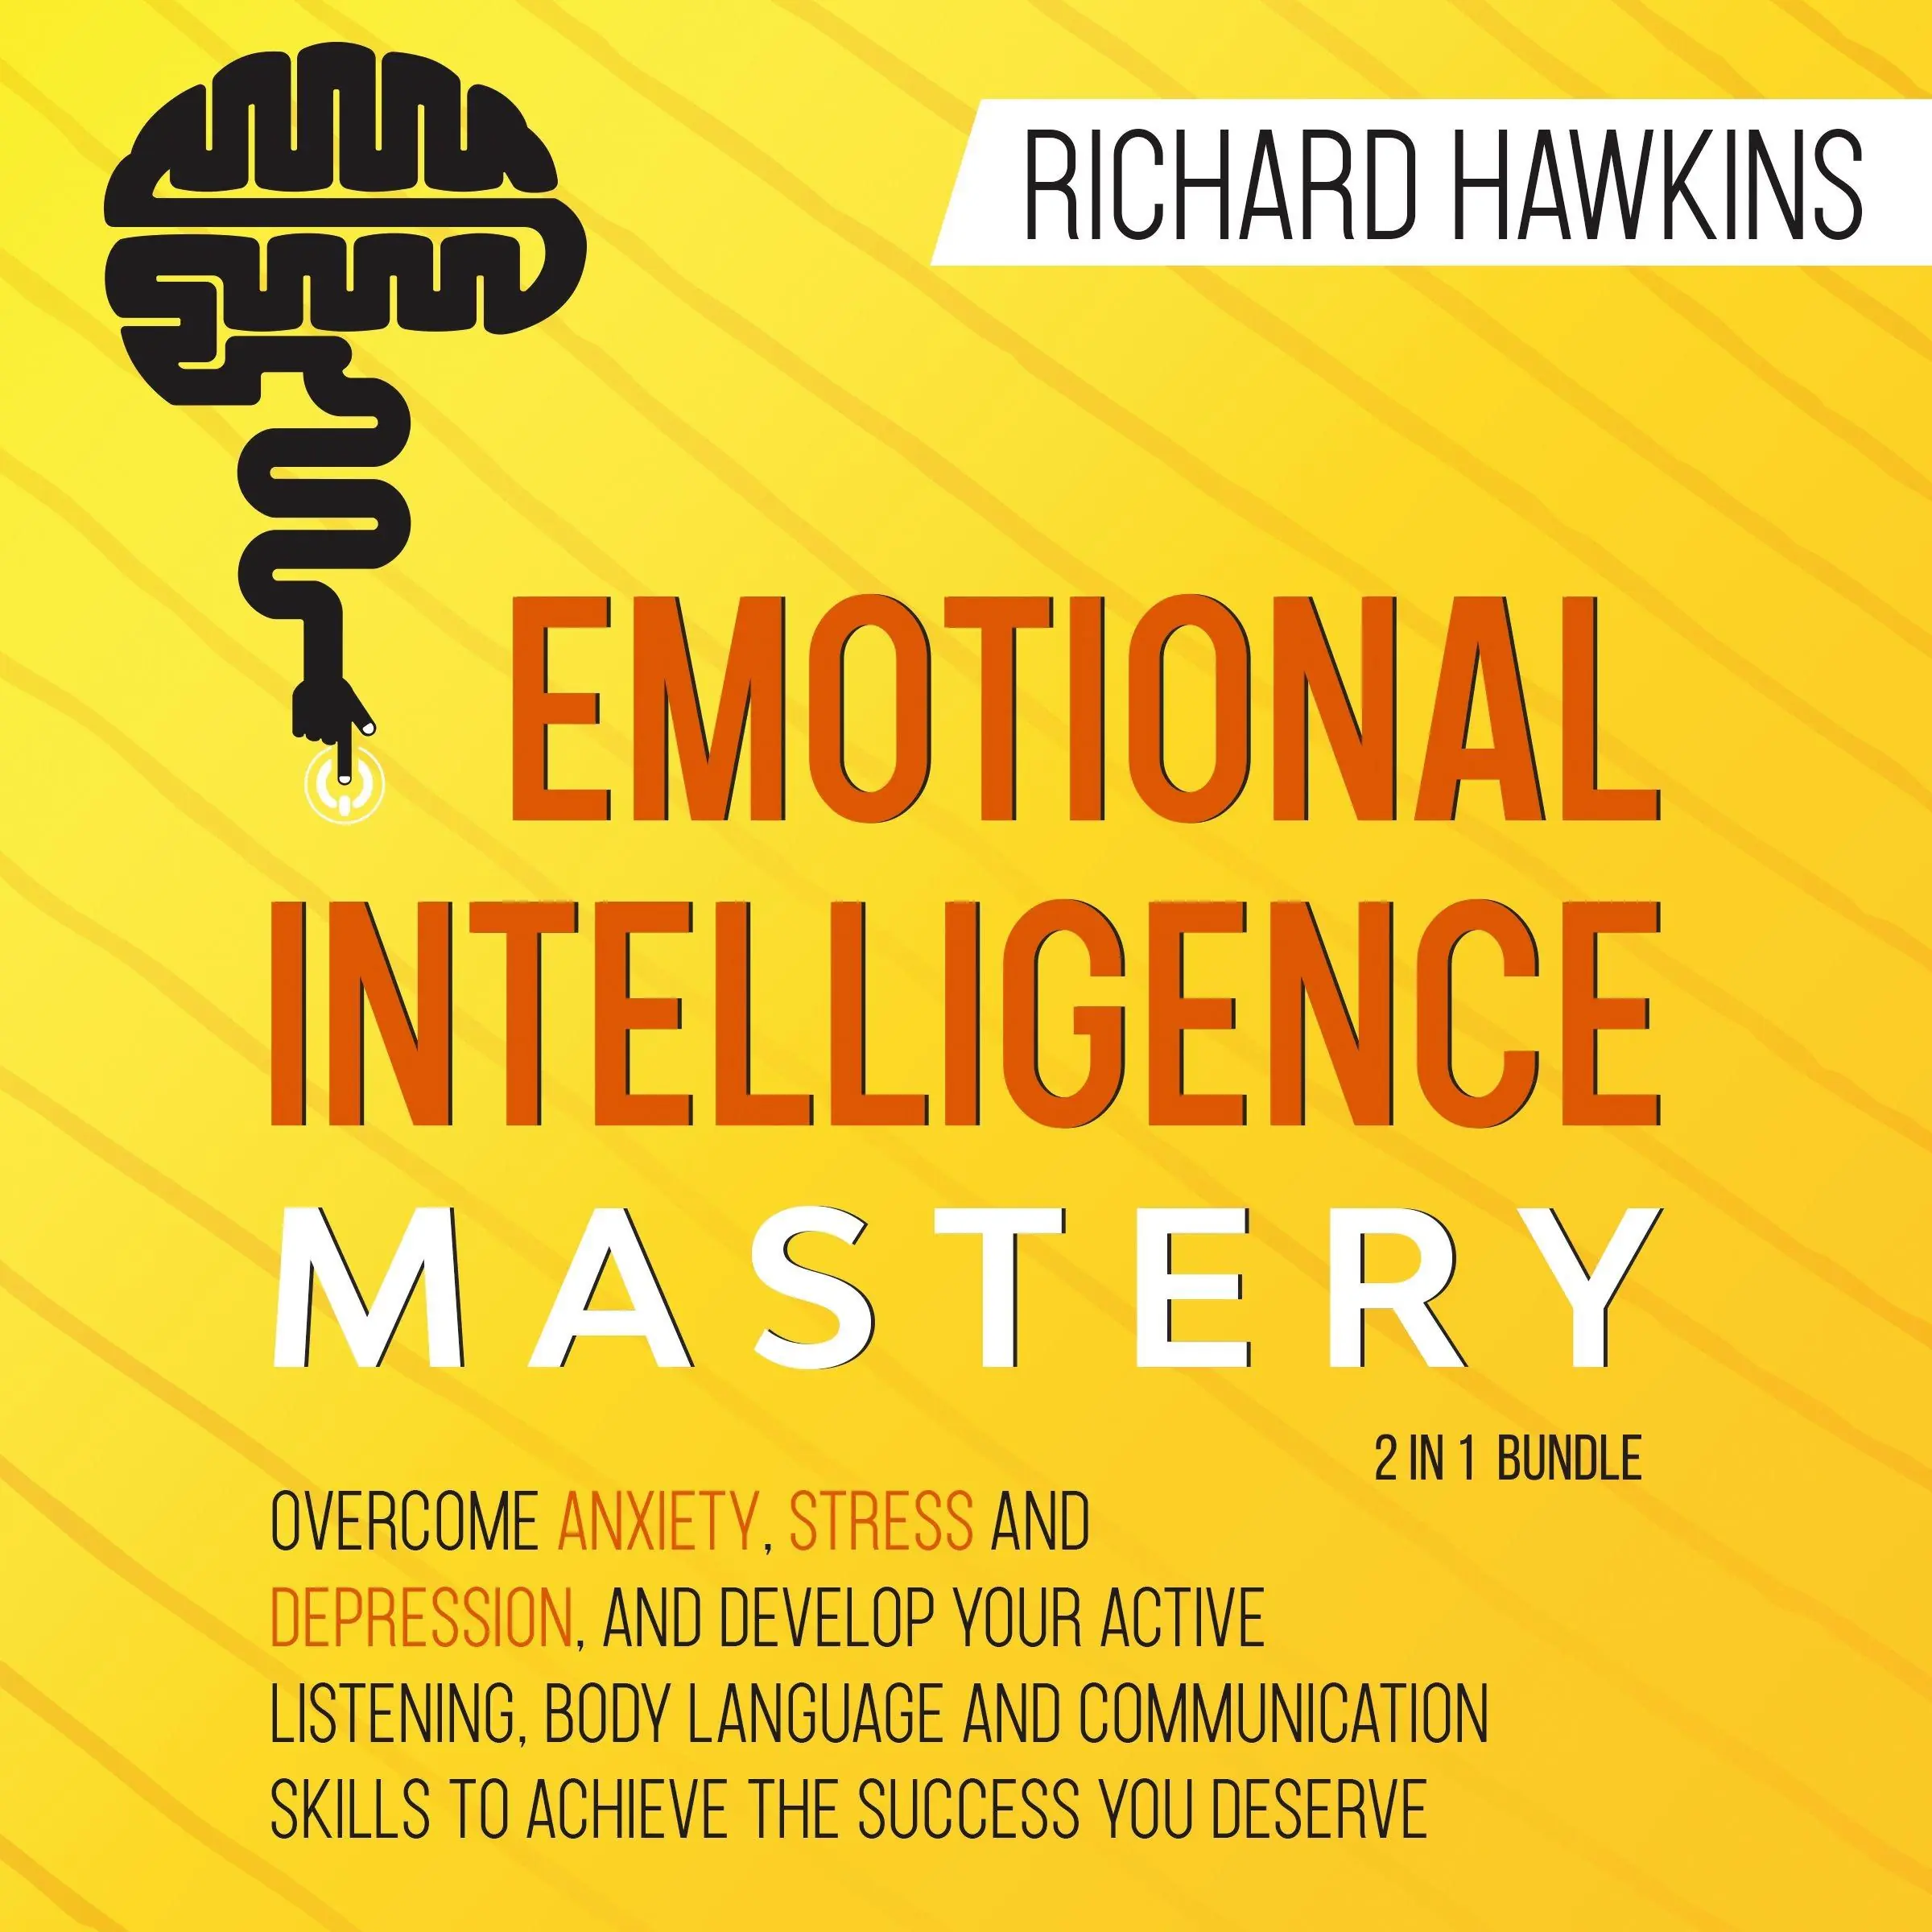 Emotional Intelligence Mastery - 2 in 1 Bundle Audiobook by Richard Hawkins